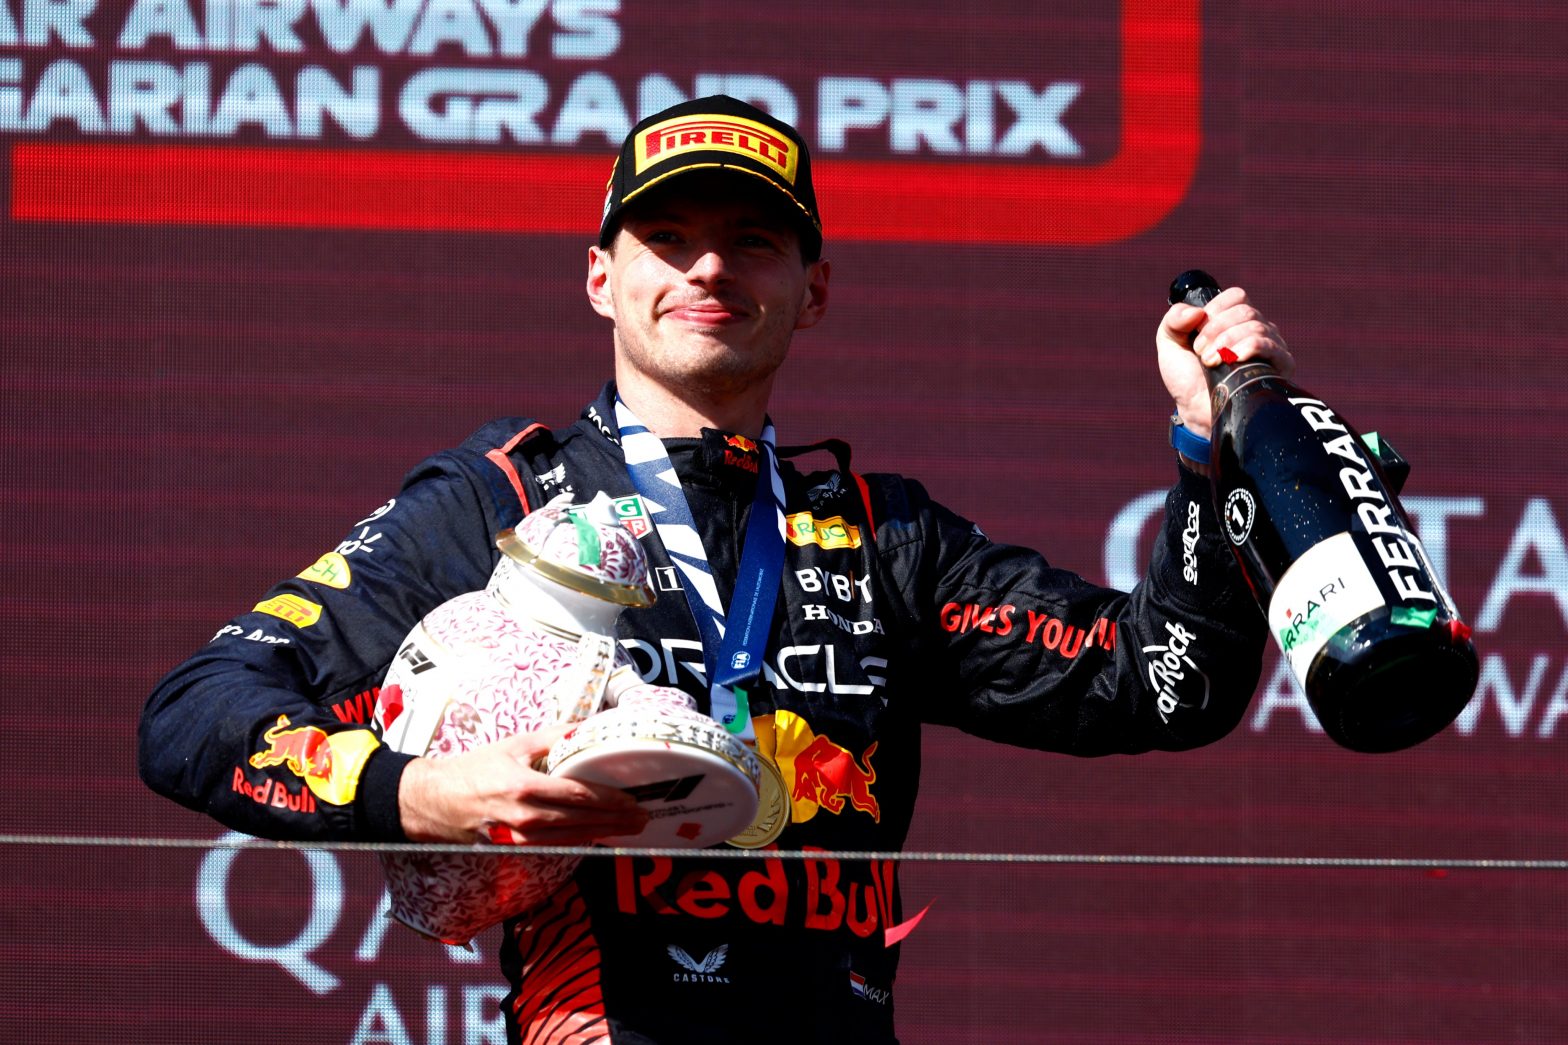 Lando Norris accidentally breaks Max Verstappen’s Hungarian GP trophy during celebration | Watch video